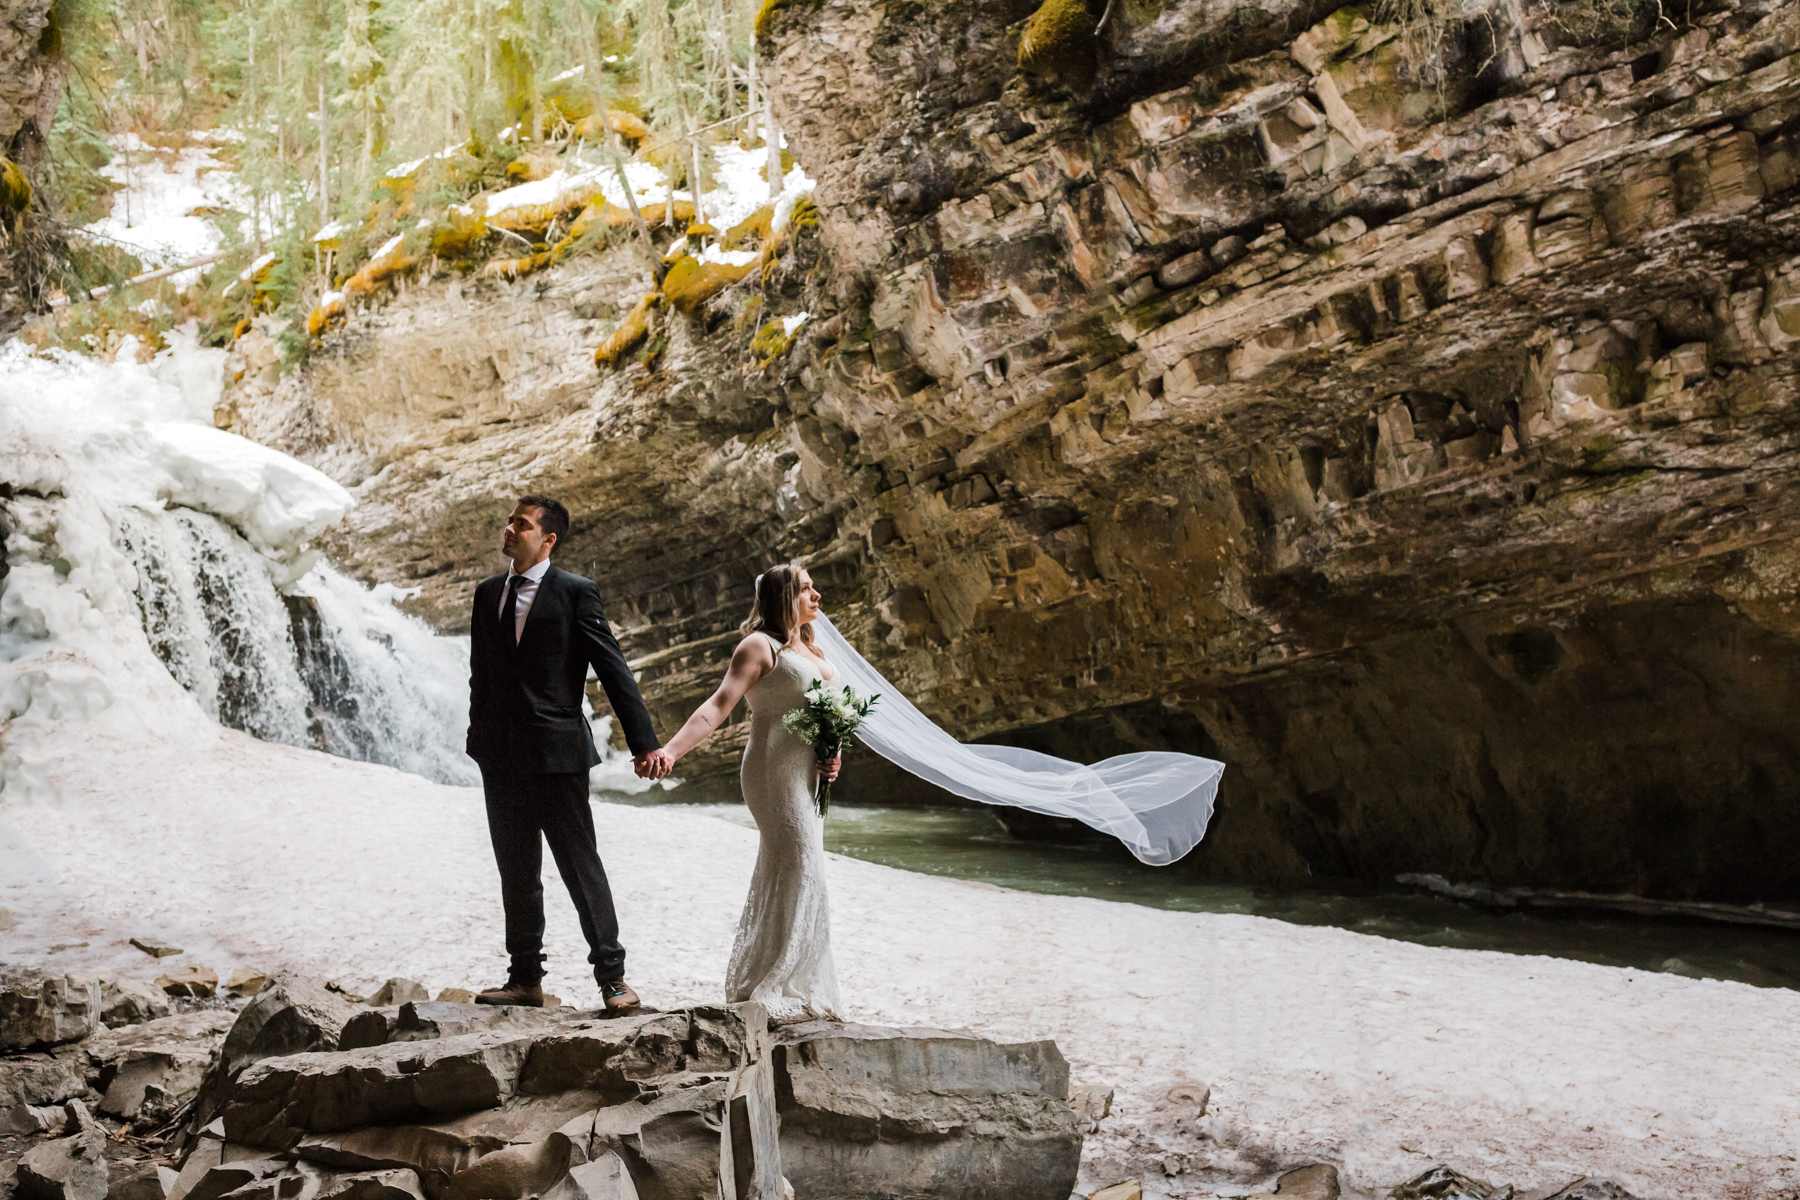 Banff Adventure Wedding Photographers for Lake Minnewanka Elopement - Image 44